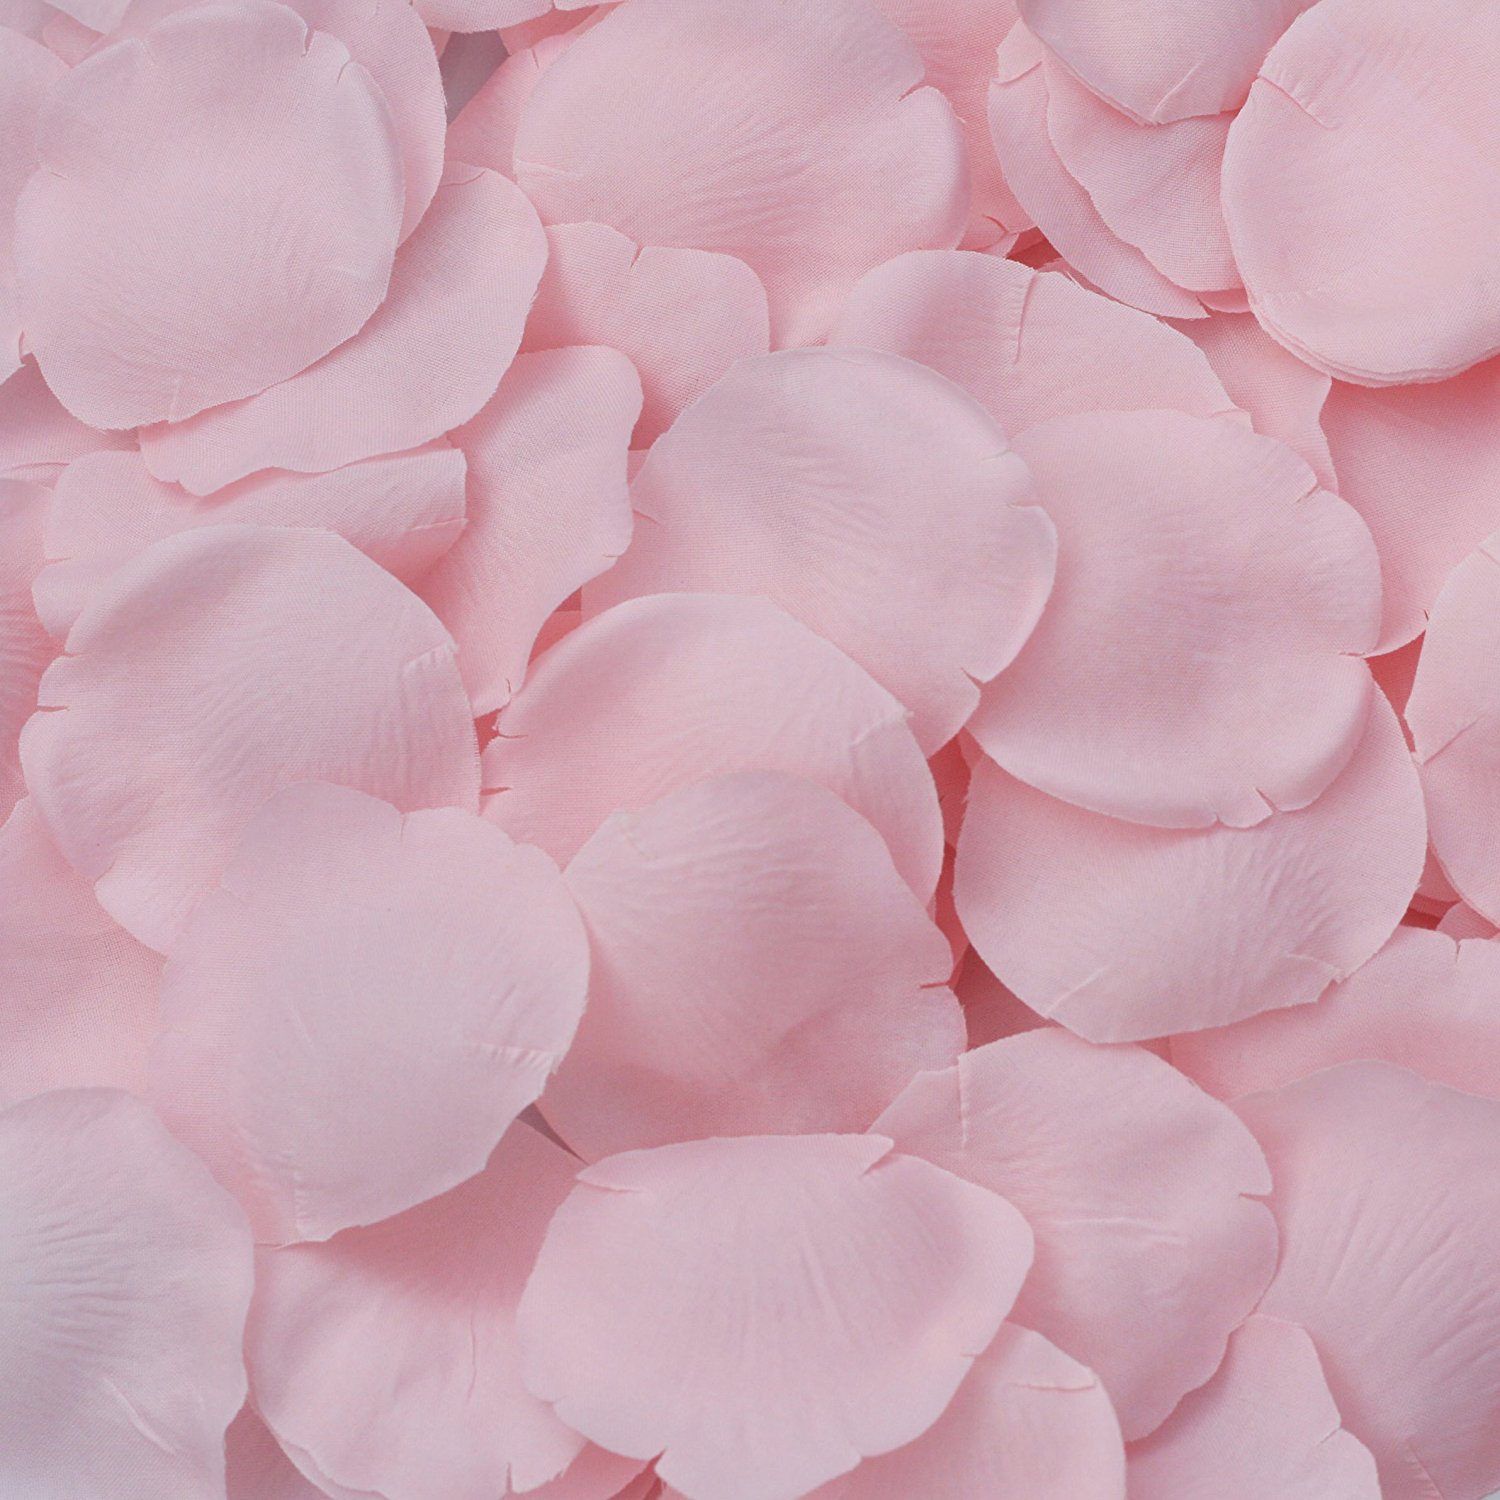 Amazon.com: Pink Silk Rose Petals - 200 Petals - Wedding Centerpiece ...